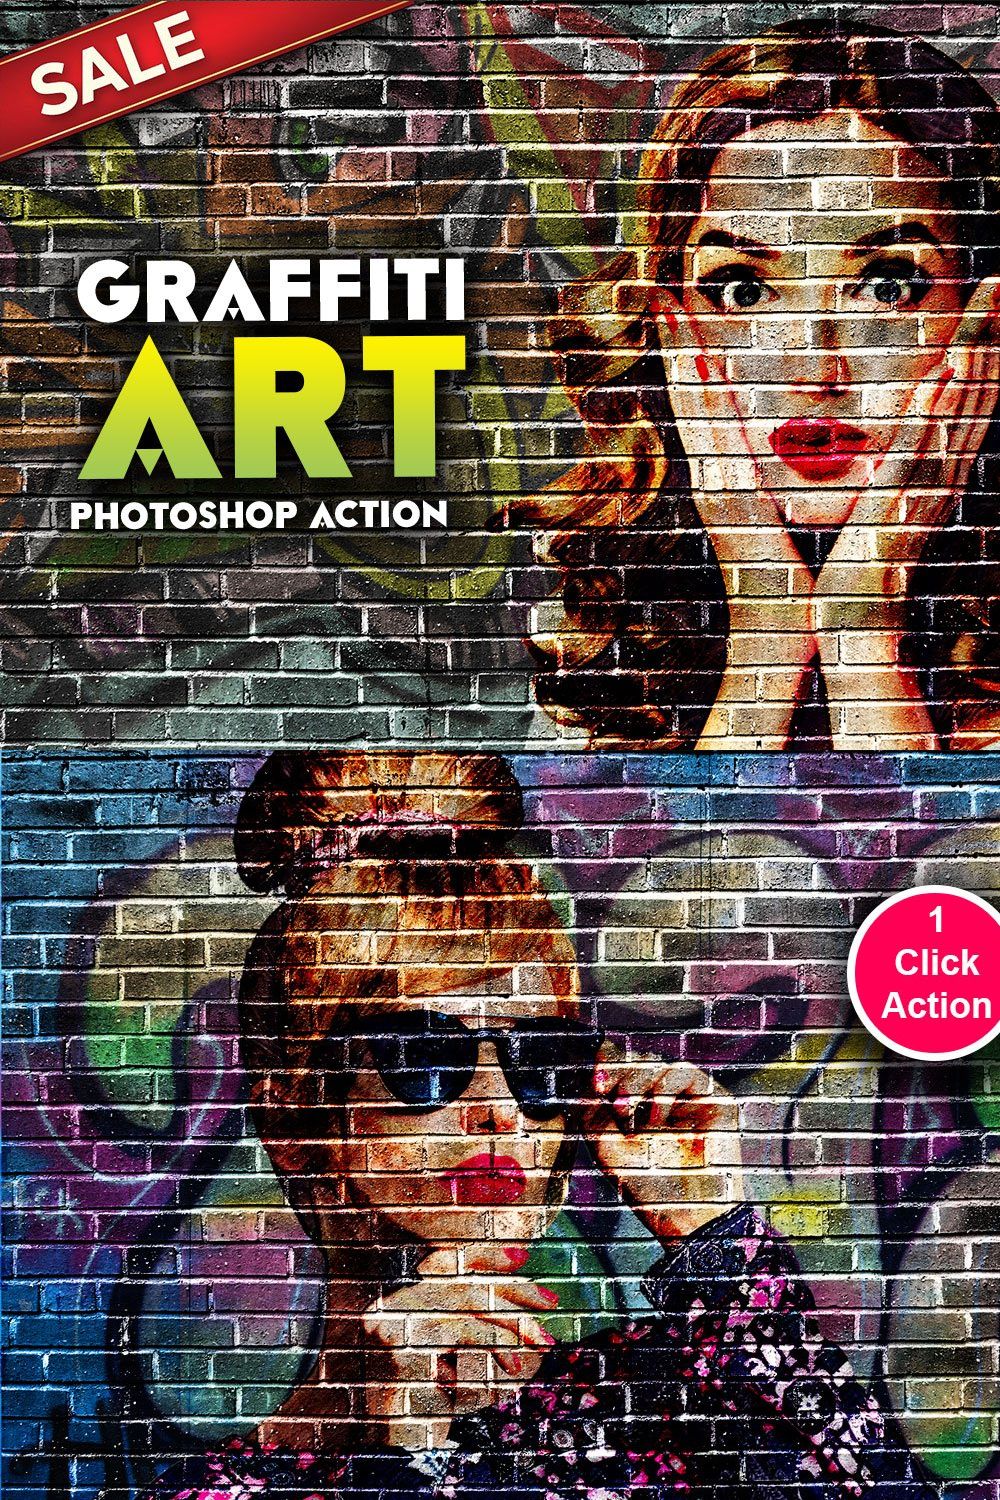 Graffiti Art Photoshop Action pinterest preview image.